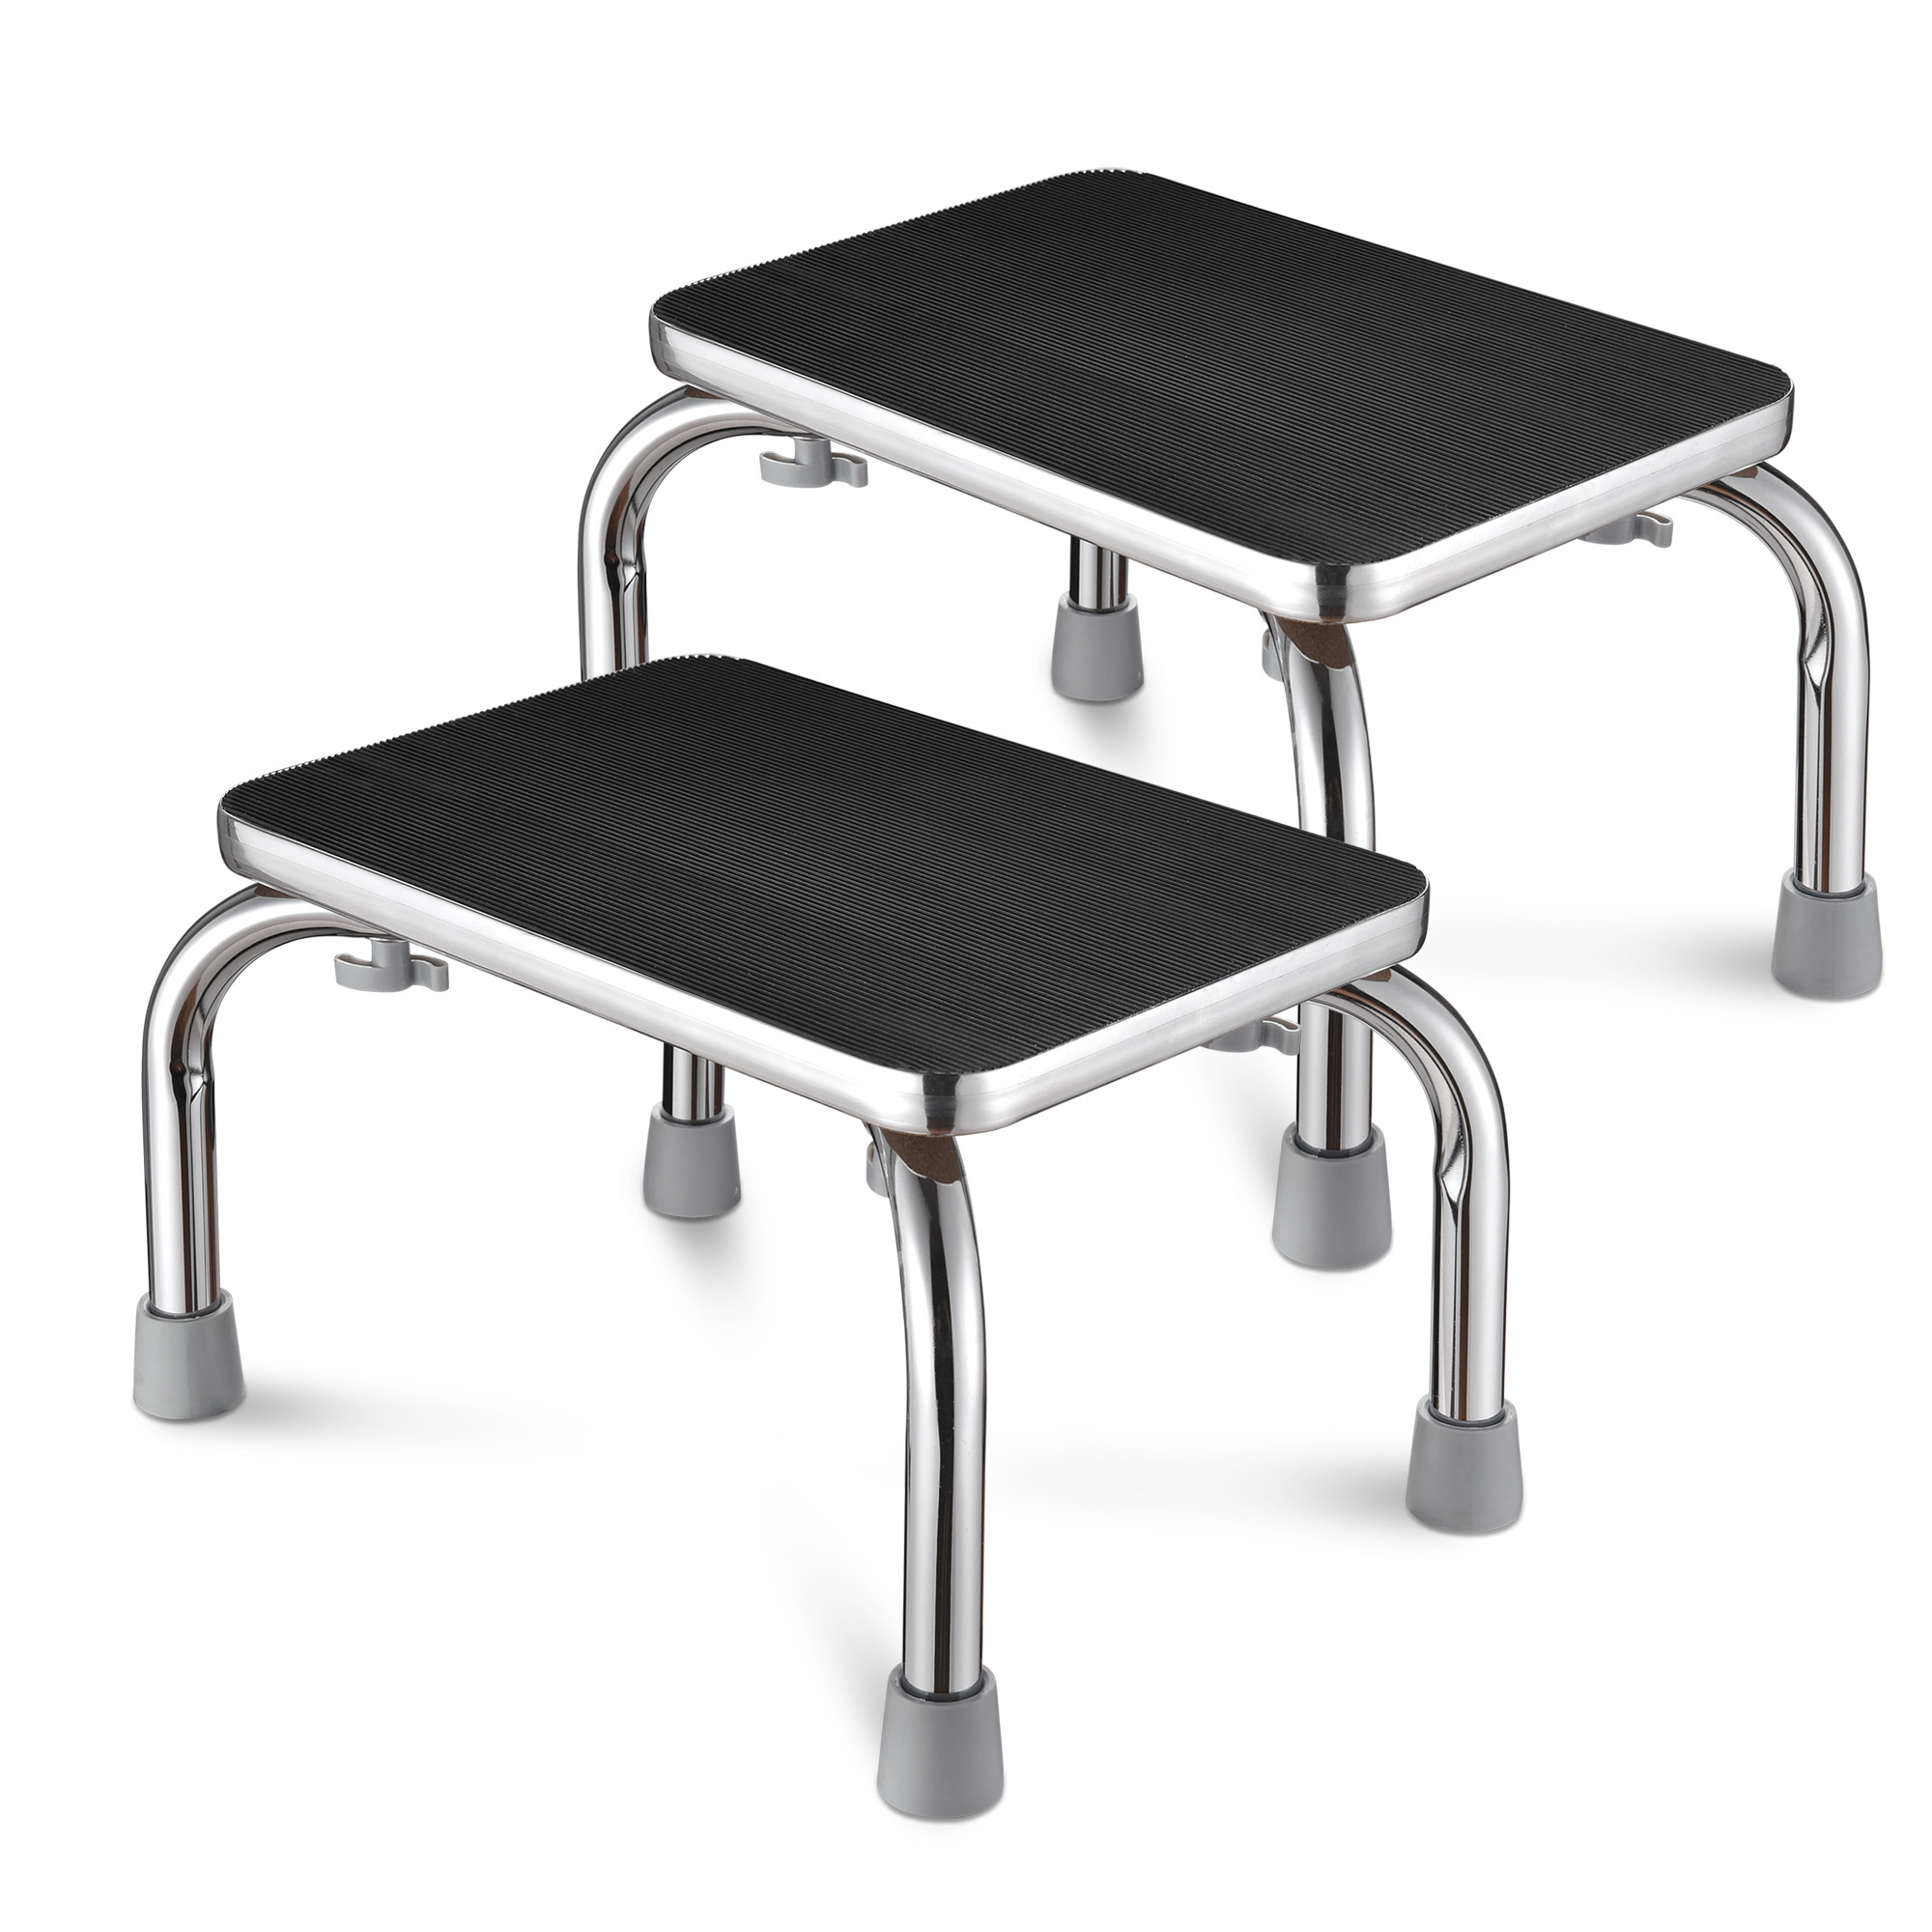 Yescom Medical Steel Step Stool Anti-Slip Platform Footstool for Seniors Adults 2 Packs